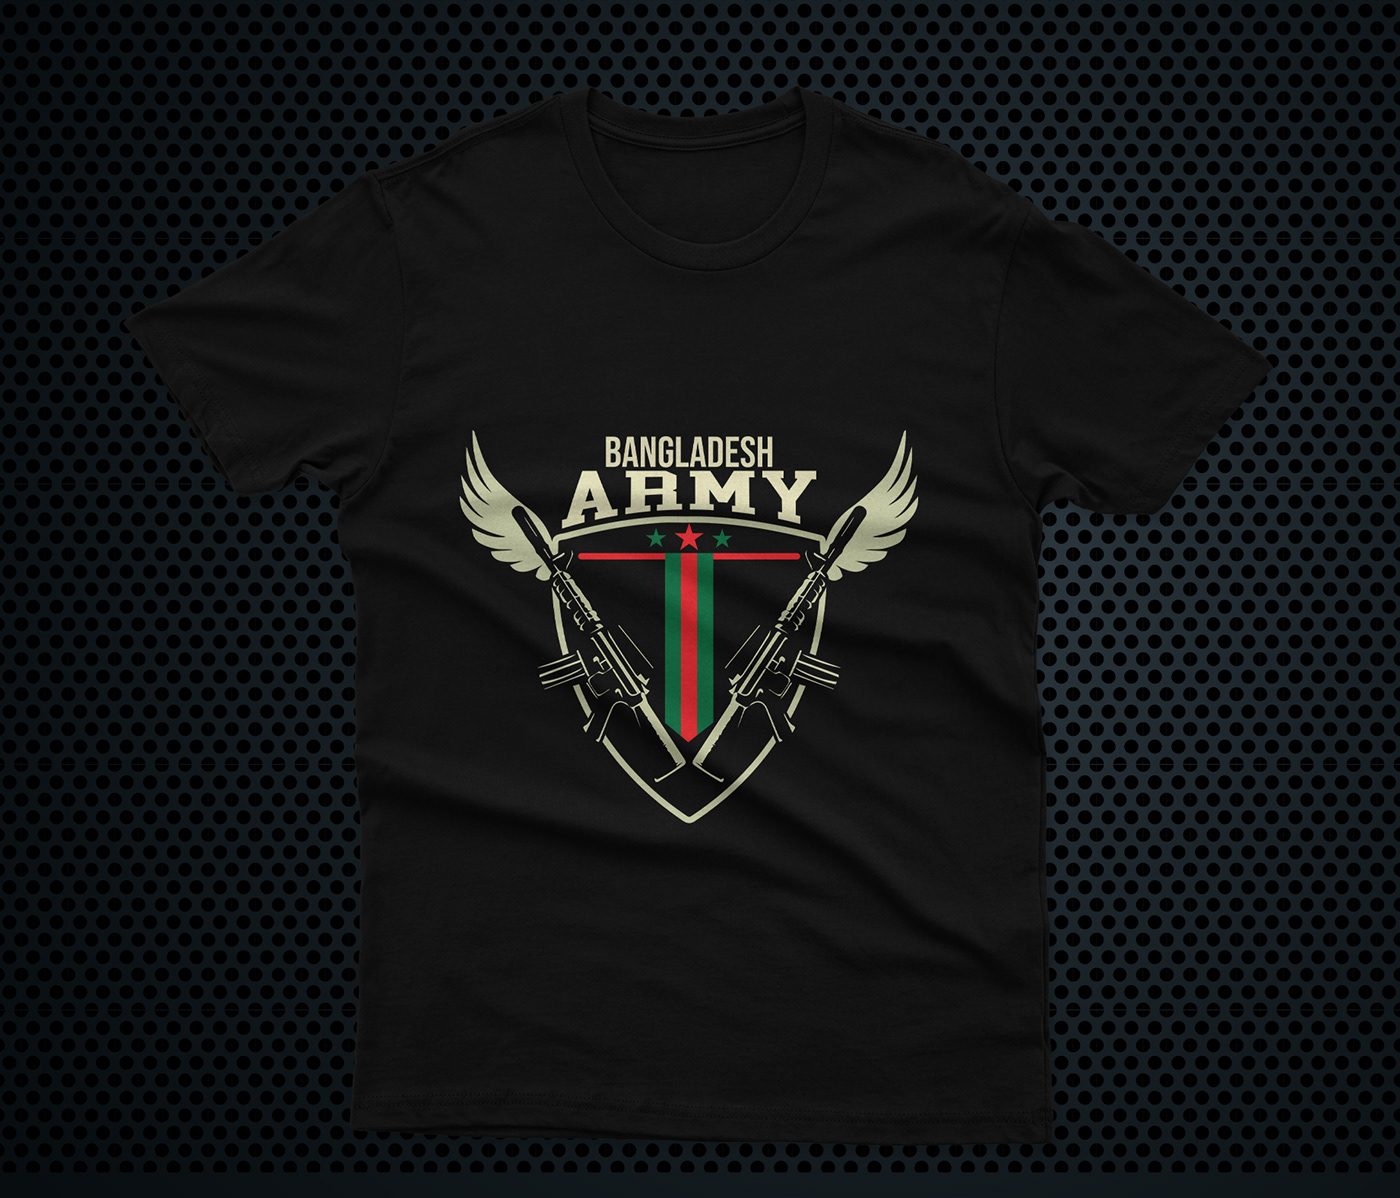 Bangladesh army typography   Graphic Designer Military design marketing   army t shirt design military t shirt